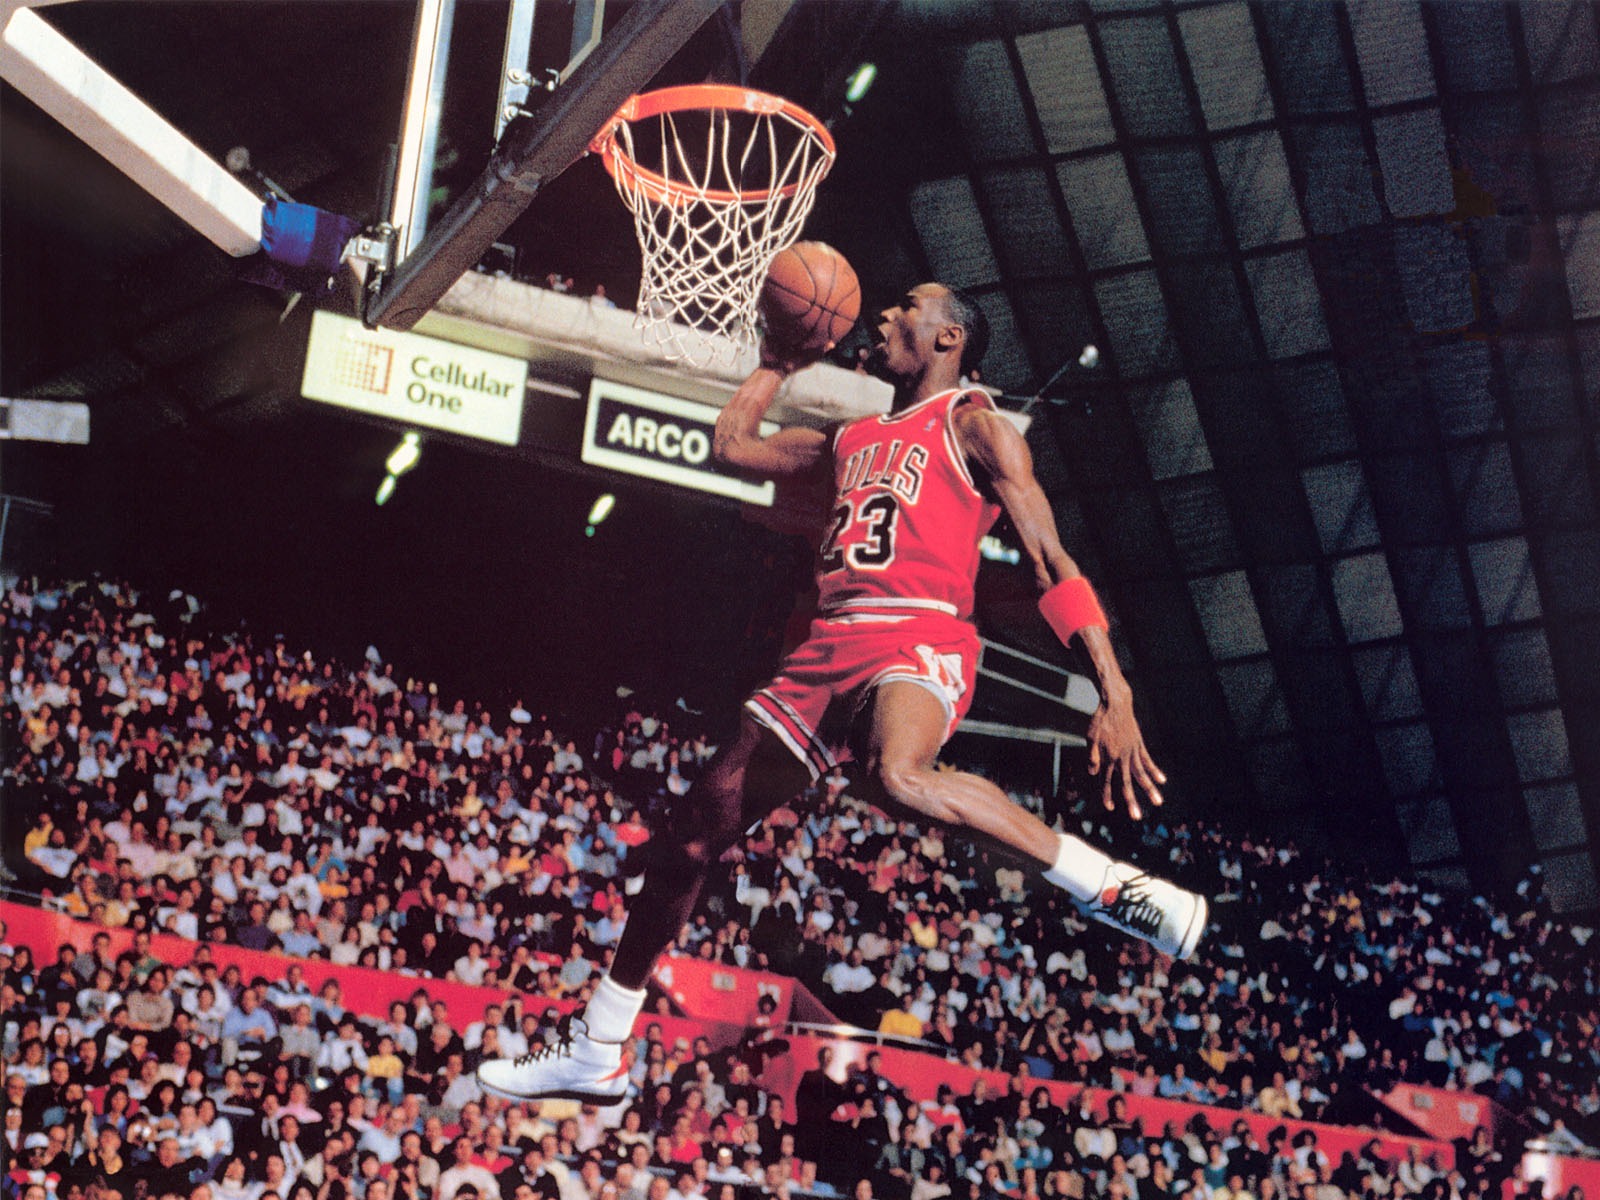 Soccer Michael Jordan HD Wallpaper